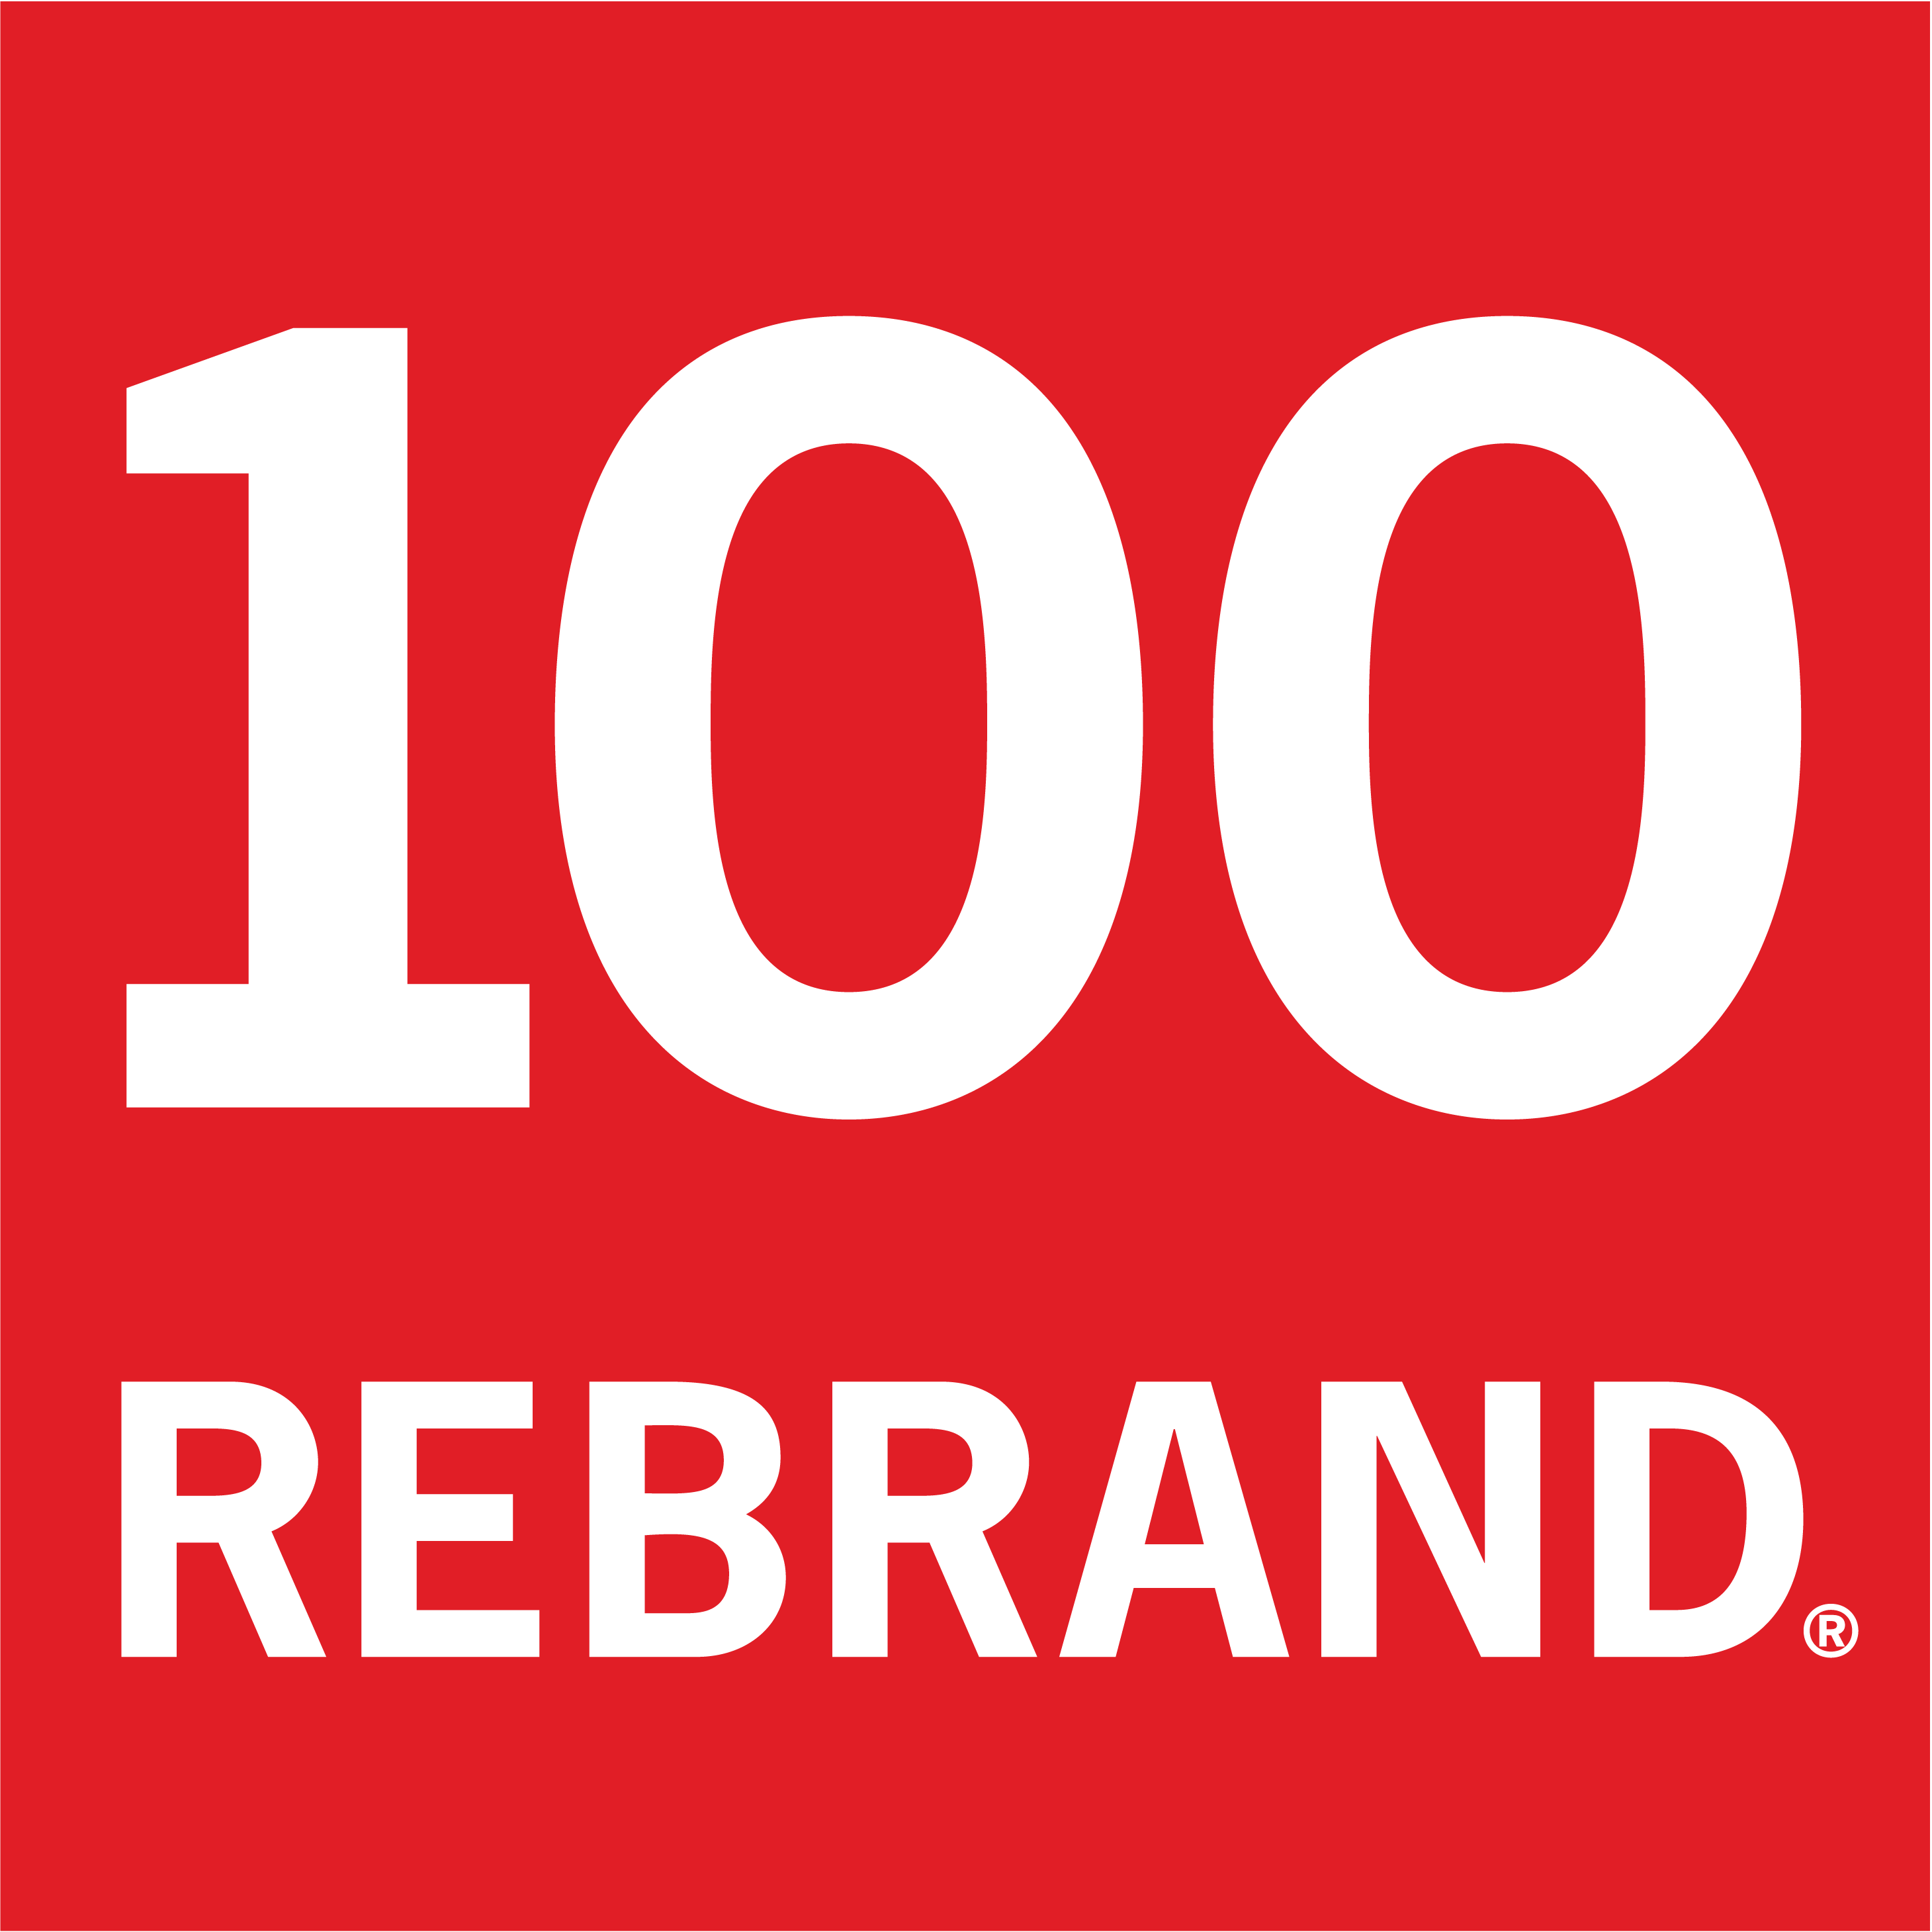 rebrand 100 logo